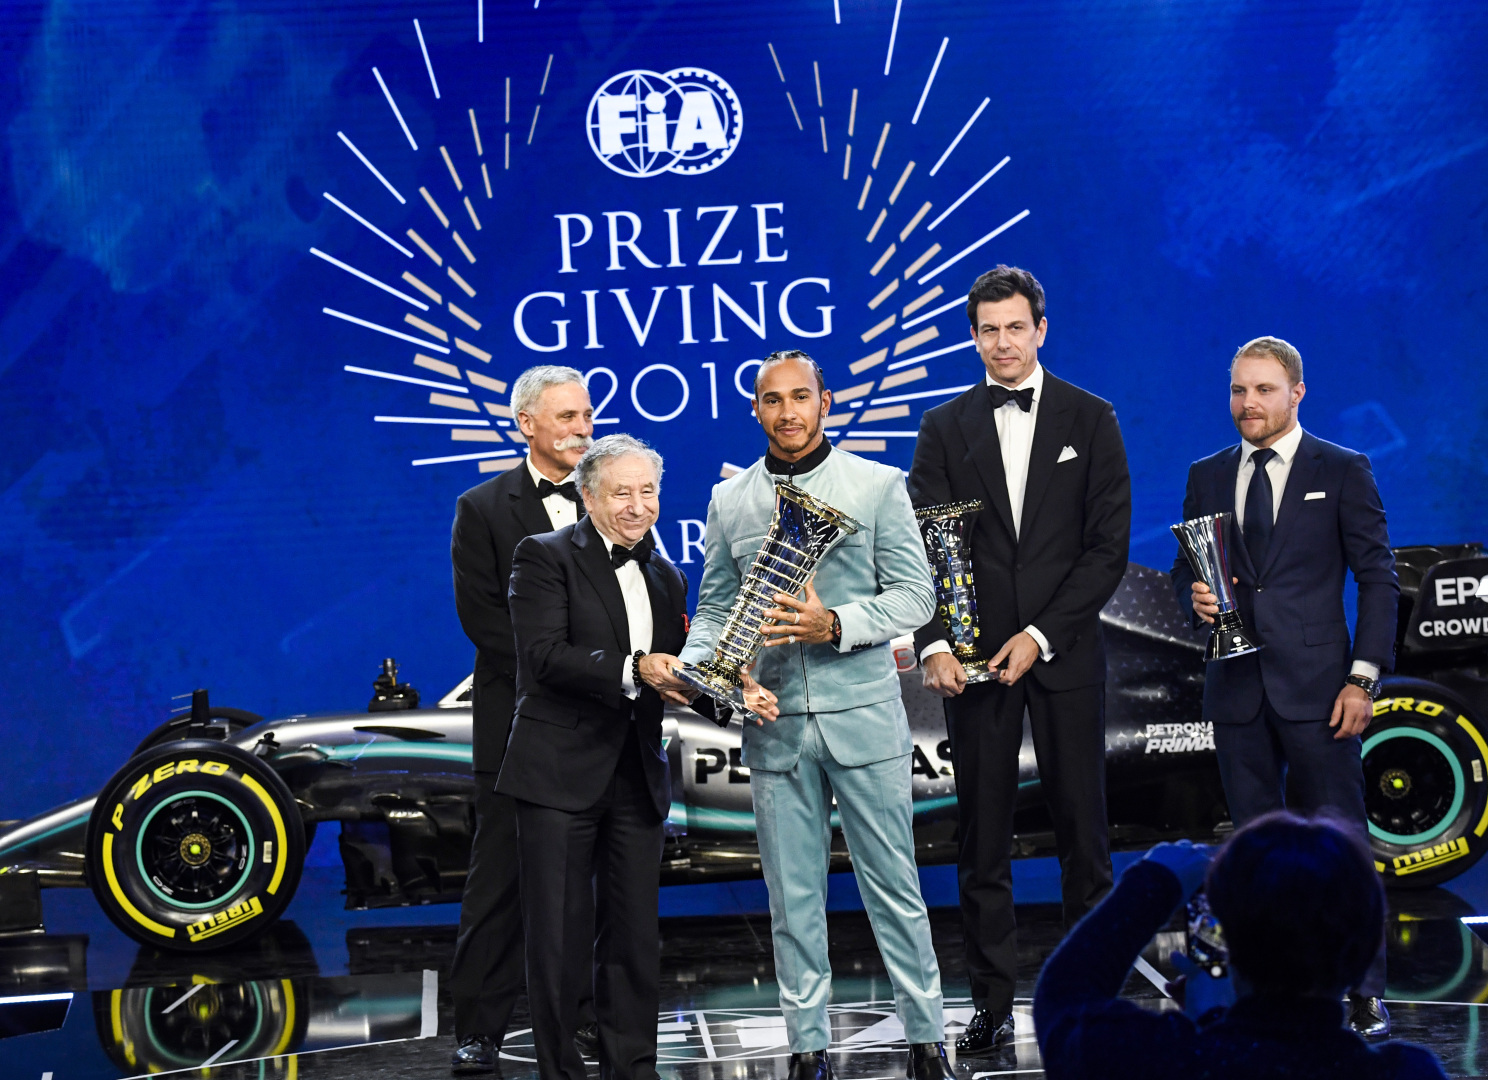 2019 FIA Prize Giving Gala: Toto Wolff, Lewis Hamilton and Valtteri Bottas receive their 2019 trophies (image courtest Mercedes-AMG Petronas)